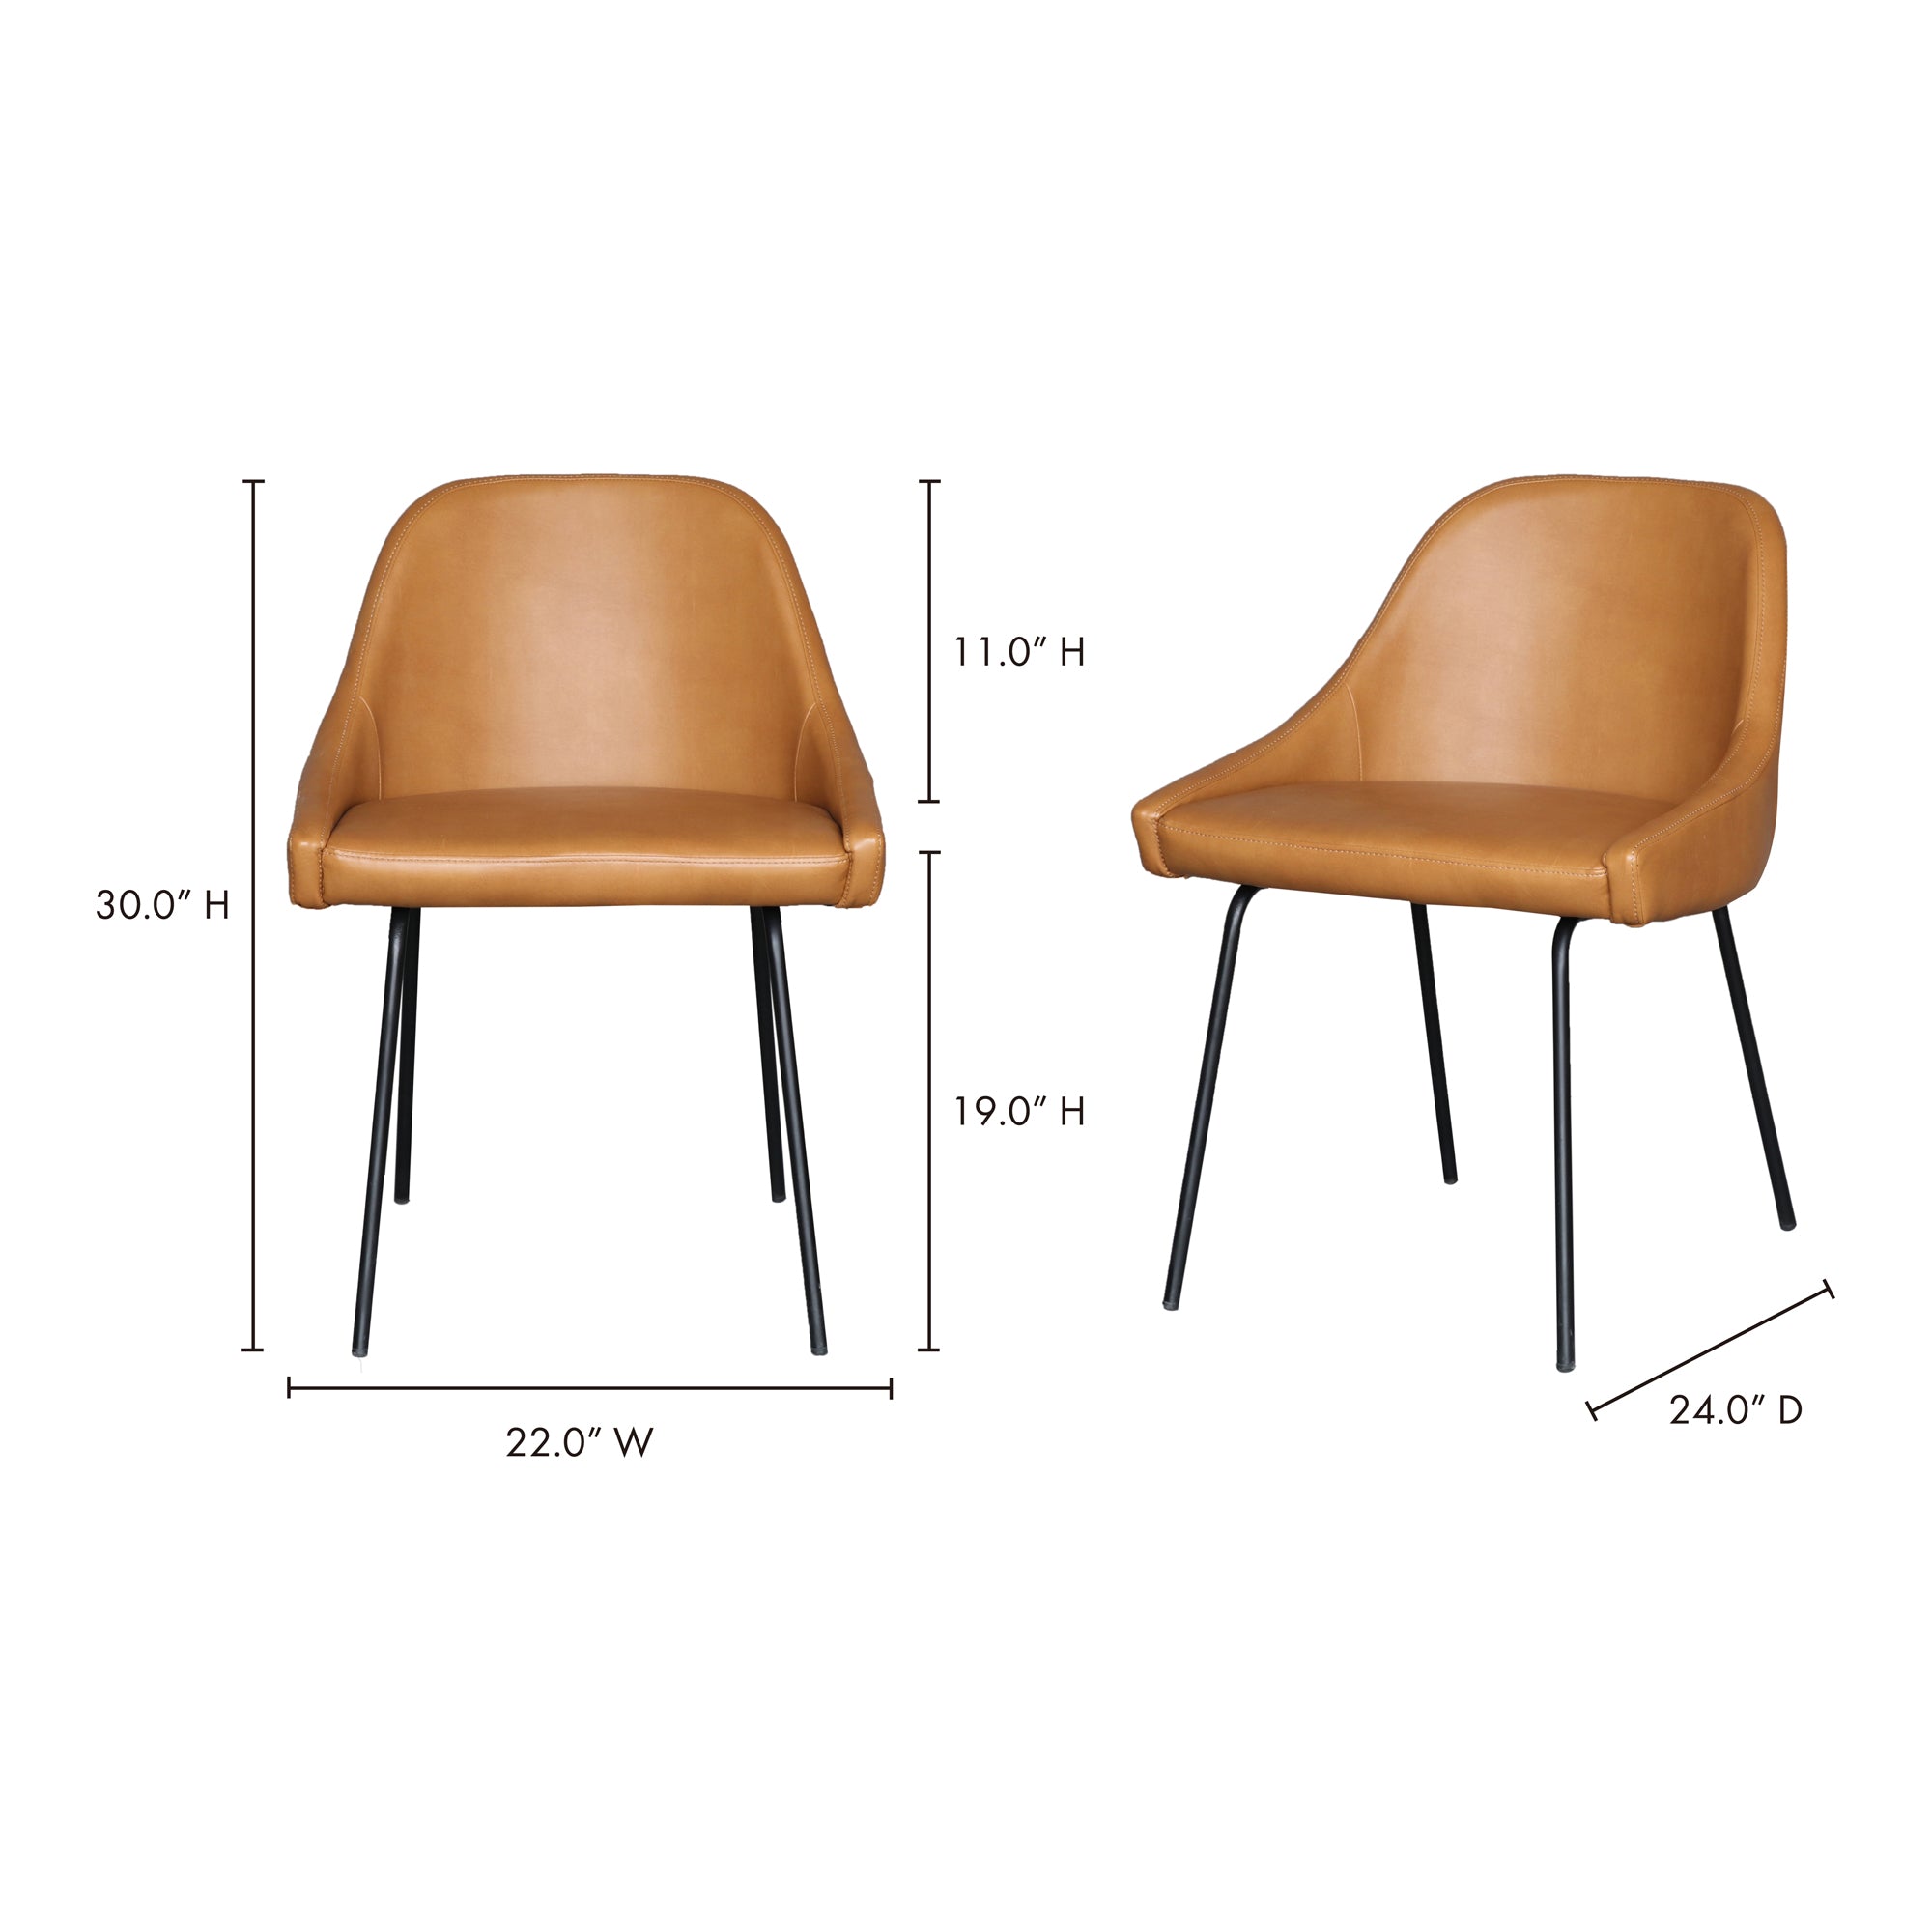 Blaze Dining Chair - Tan - - Furniture - Tipplergoods